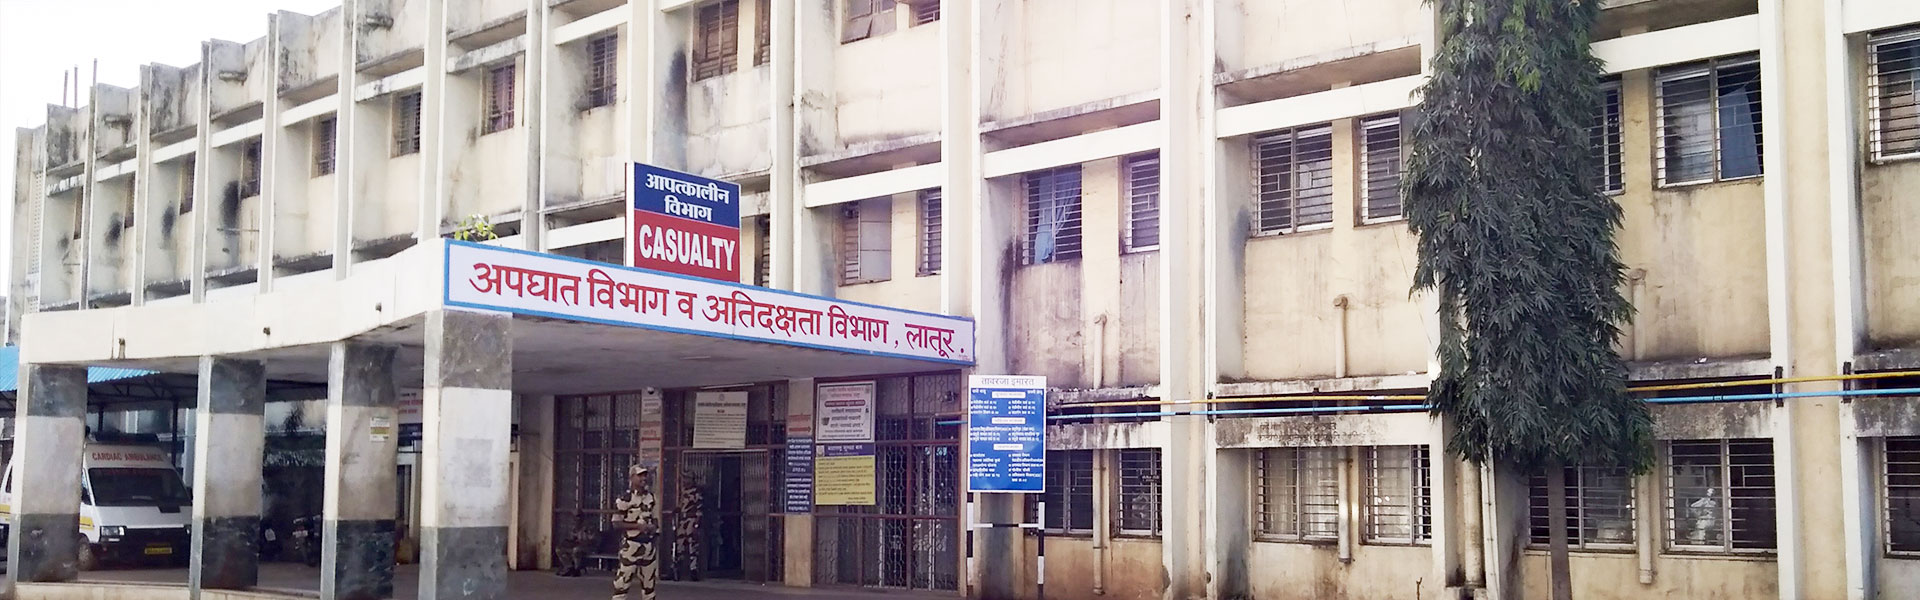 Govt Medical College And Hospital, Latur - Logo